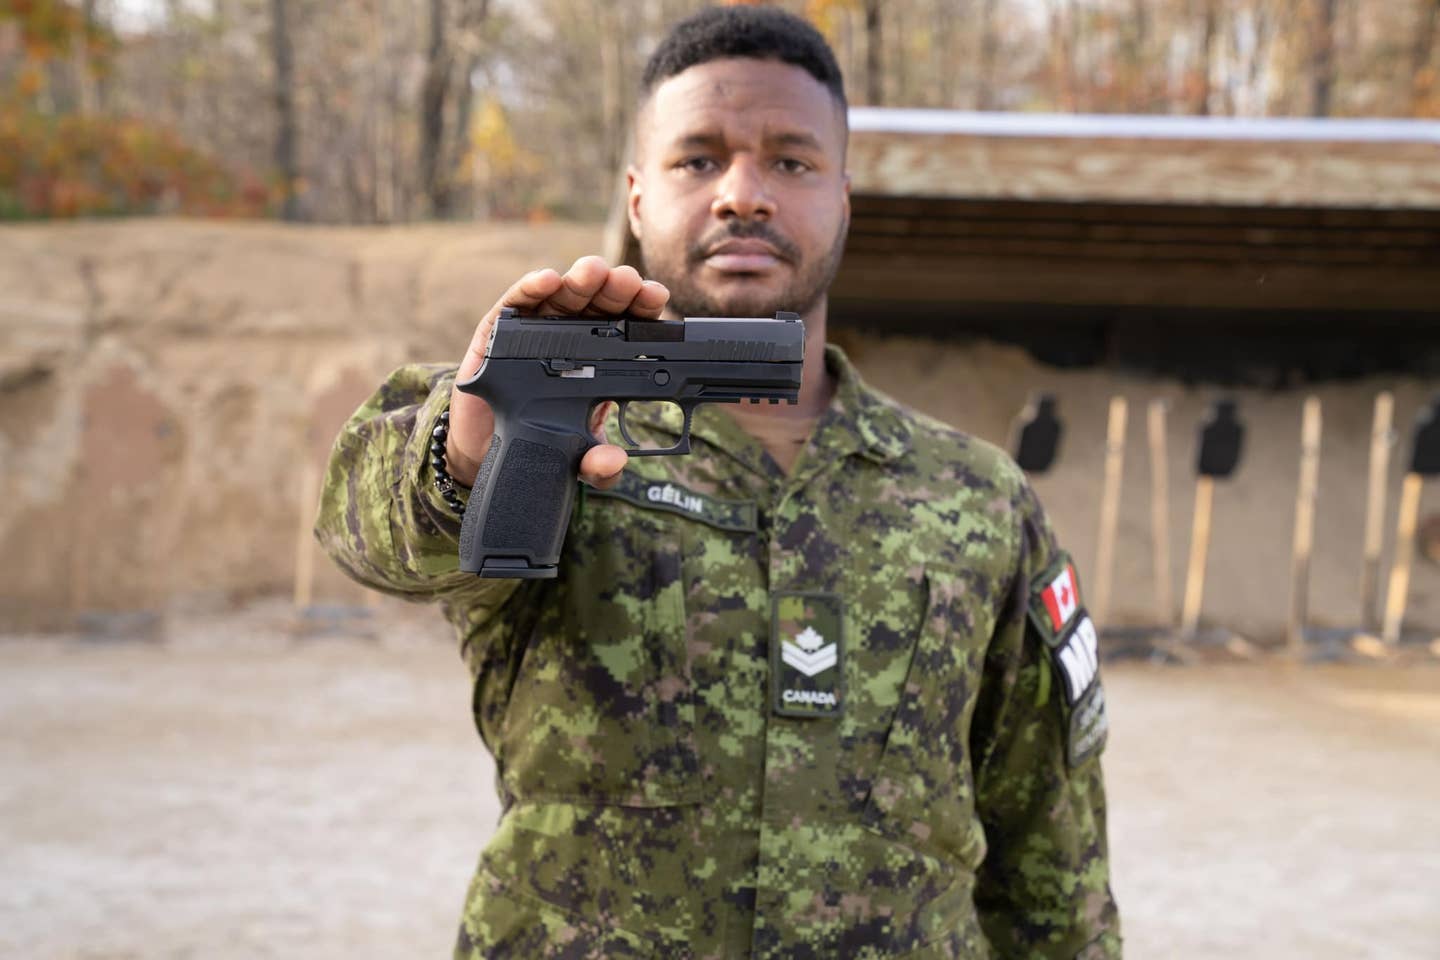 Master Corporal Gélin, MP, holding the new Sig Sauer C24, serial 001. <em>Canadian Armed Forces via Facebook</em>